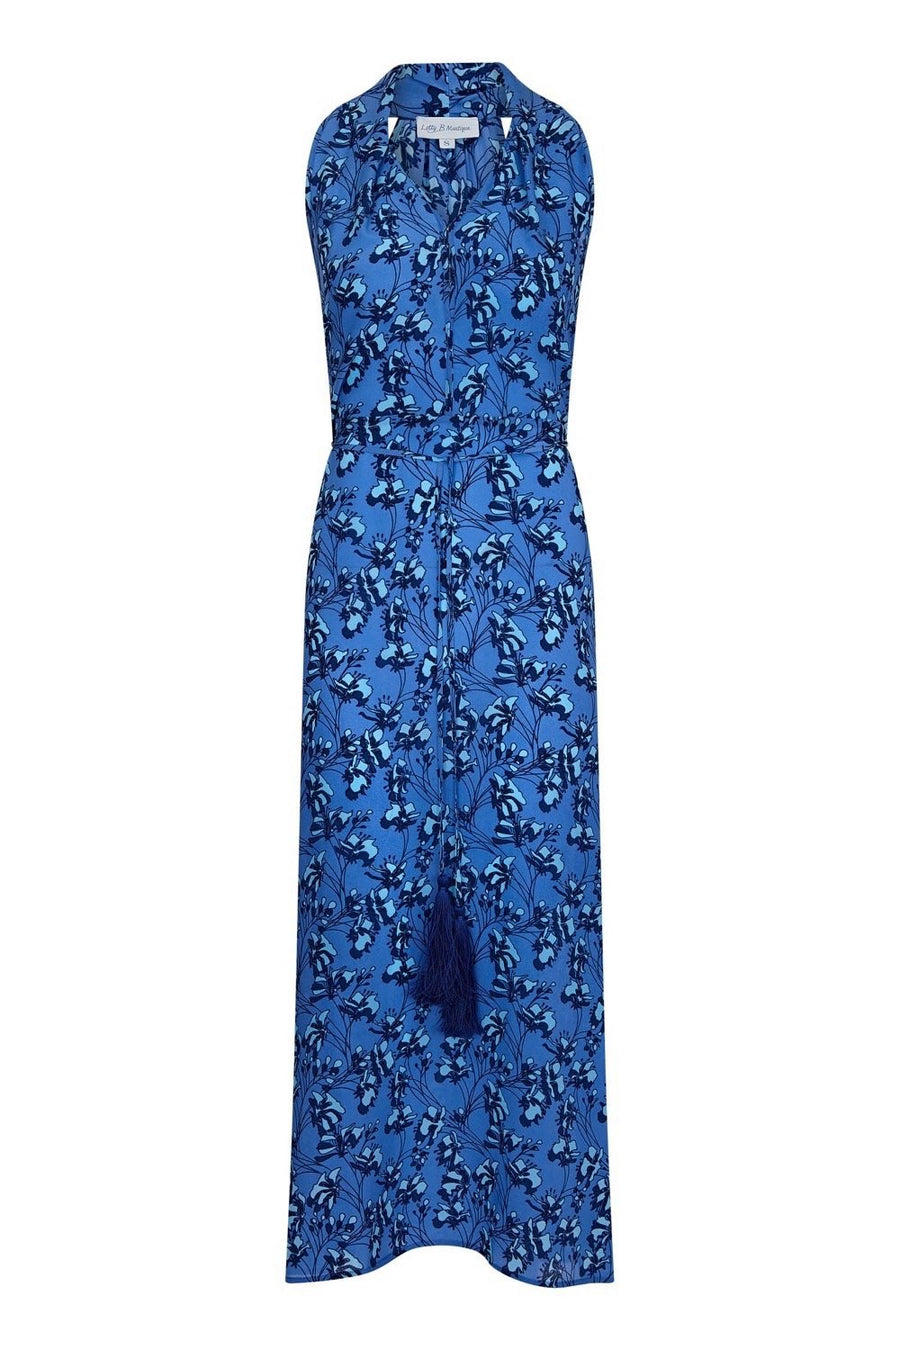 Silk Jemima Dress: FLAMBOYANT FLOWER - BLUE, long halter neck racer back crepe de chine silk dress designer Lotty B Mustique chic resort wear 